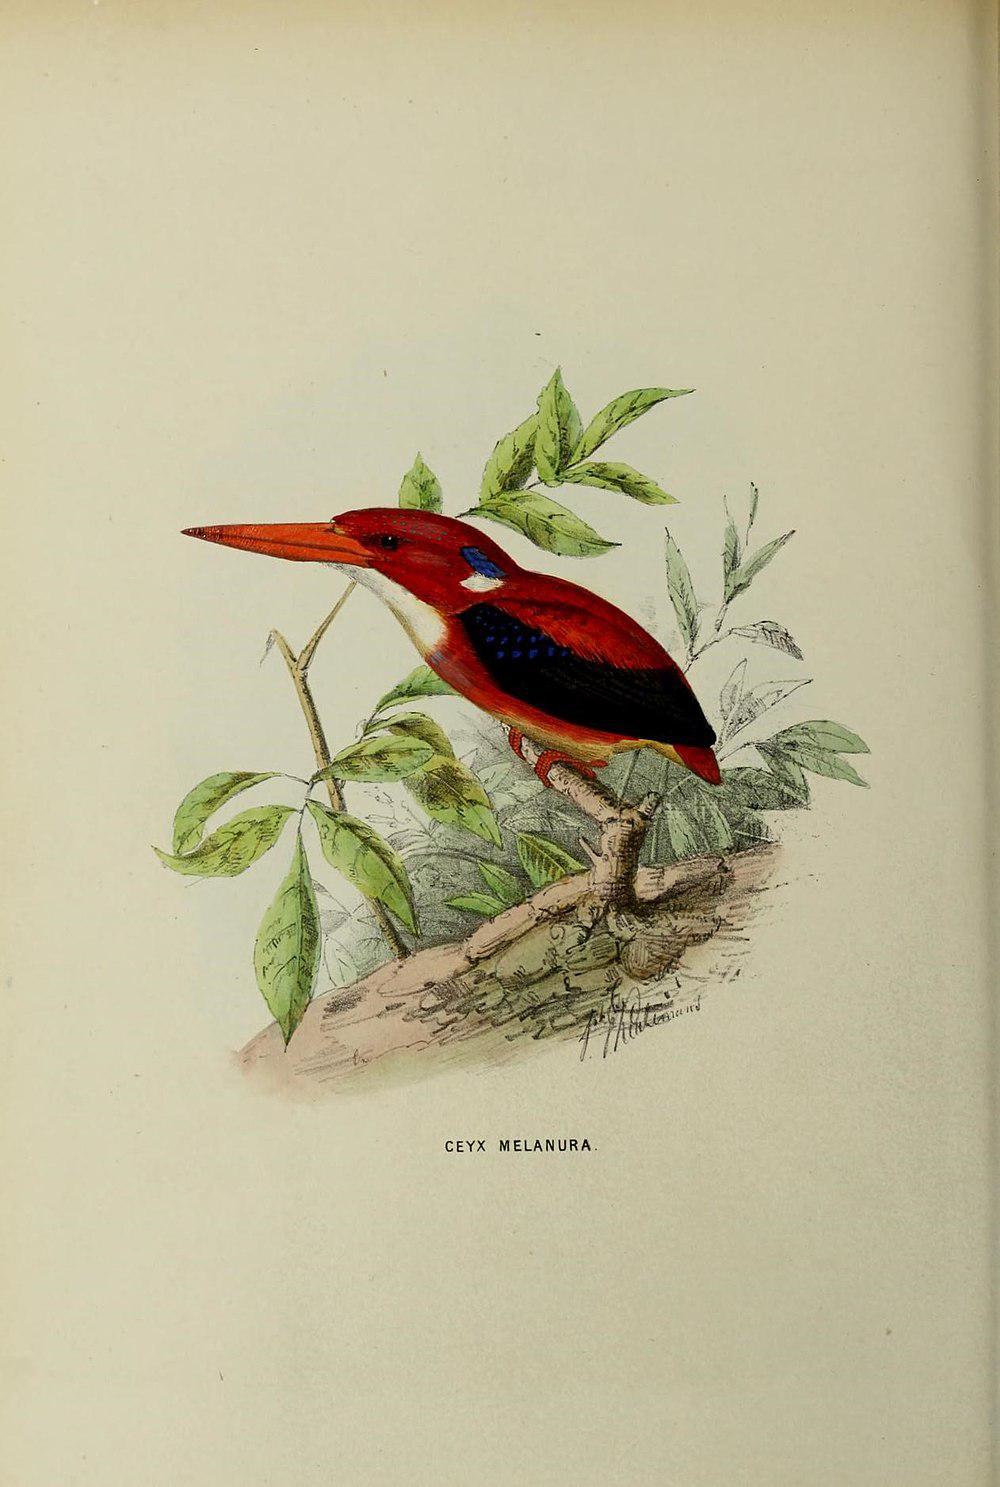 菲律宾三趾翠鸟 / Philippine Dwarf Kingfisher / Ceyx melanurus